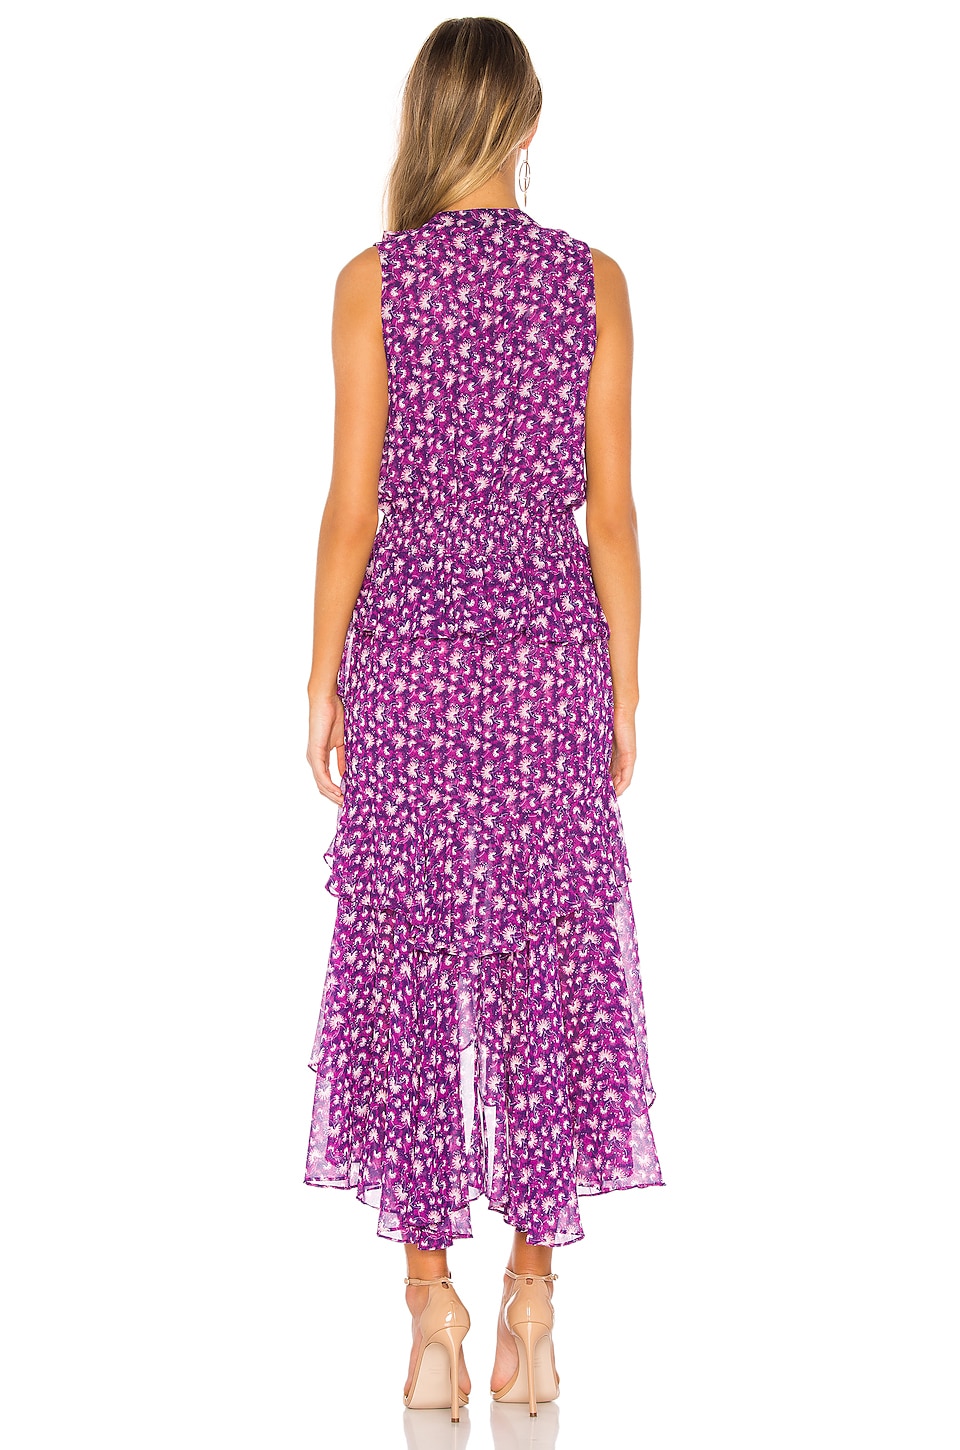 MISA Los Angeles Ilona Dress in Purple Floral | REVOLVE